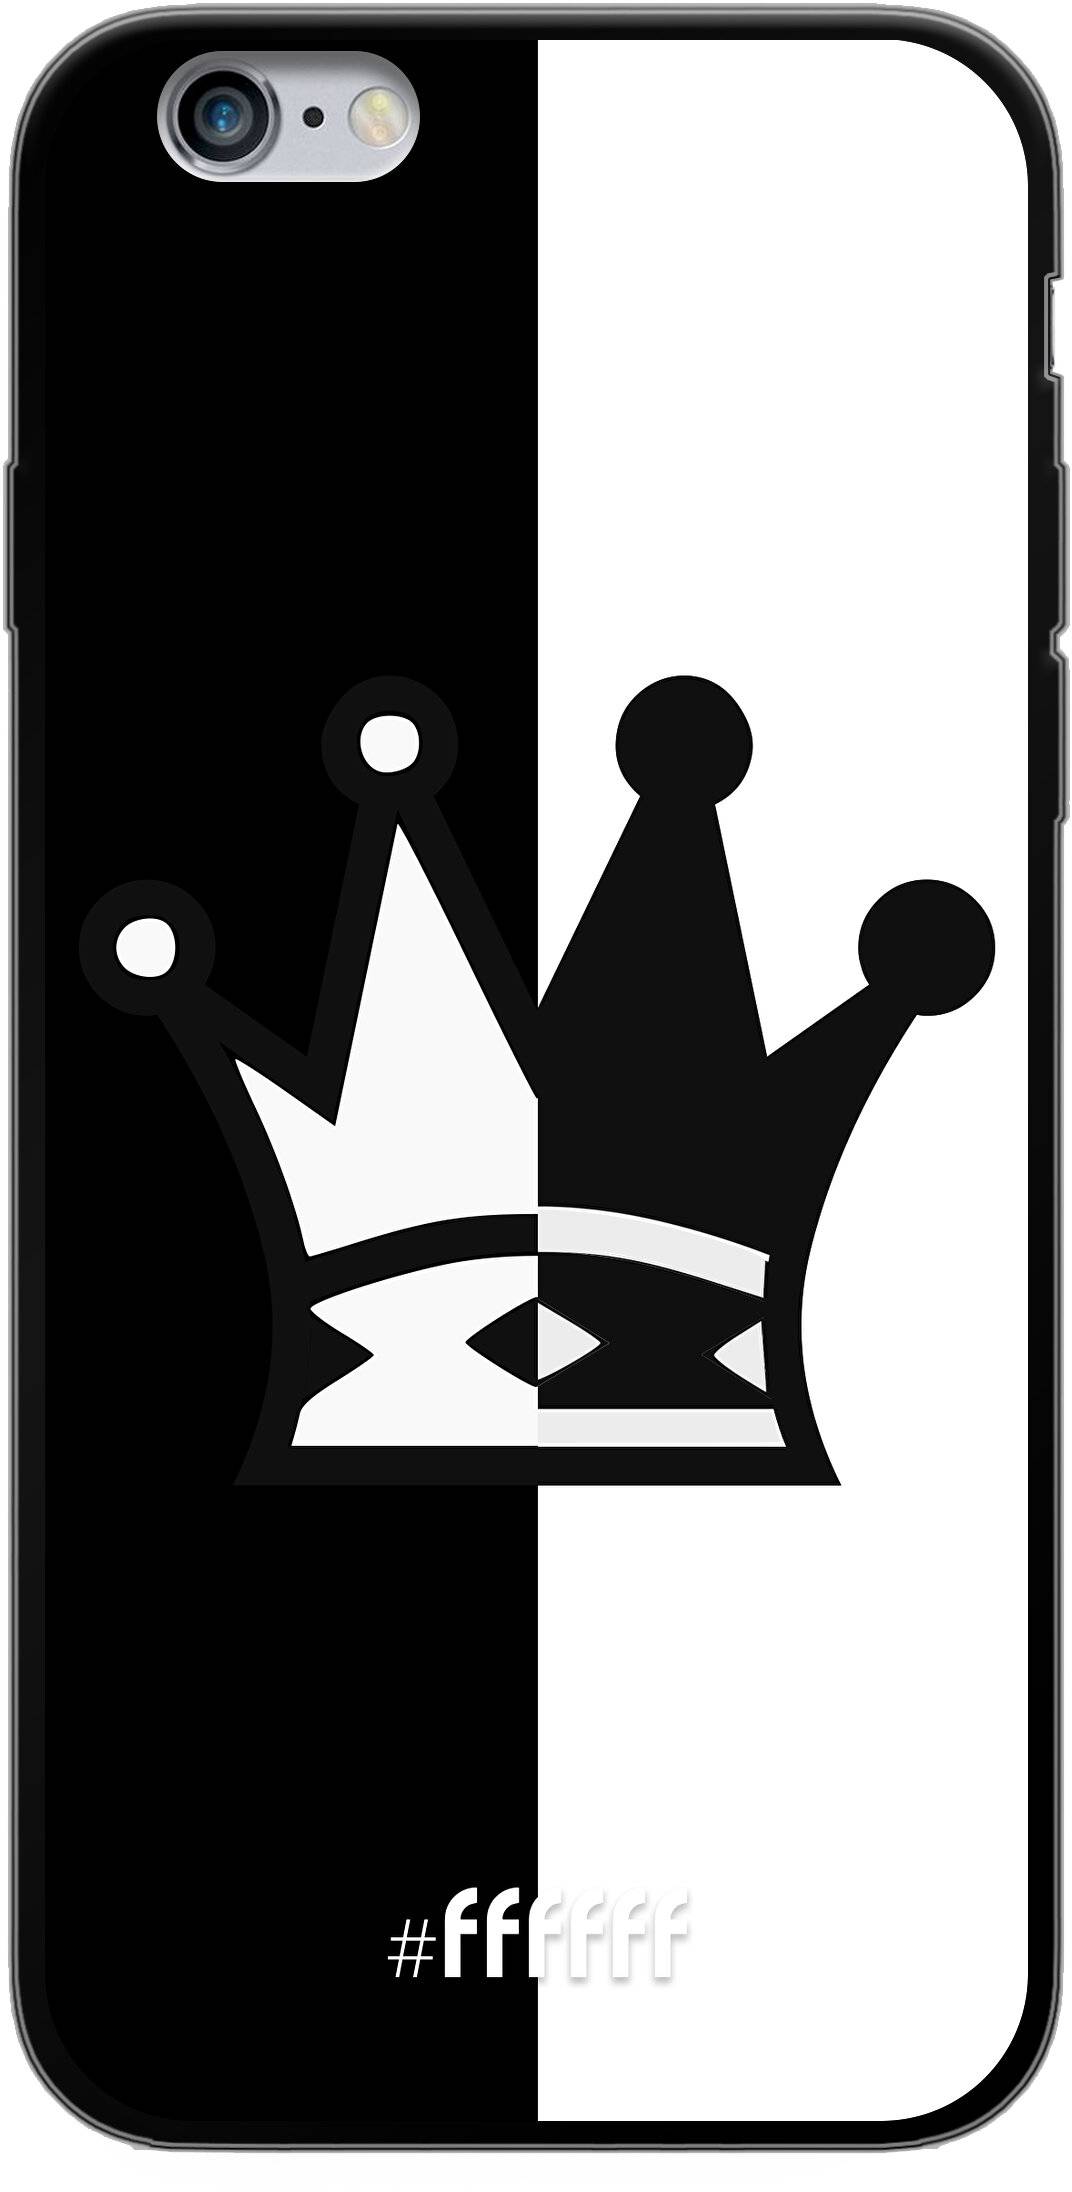 Chess iPhone 6